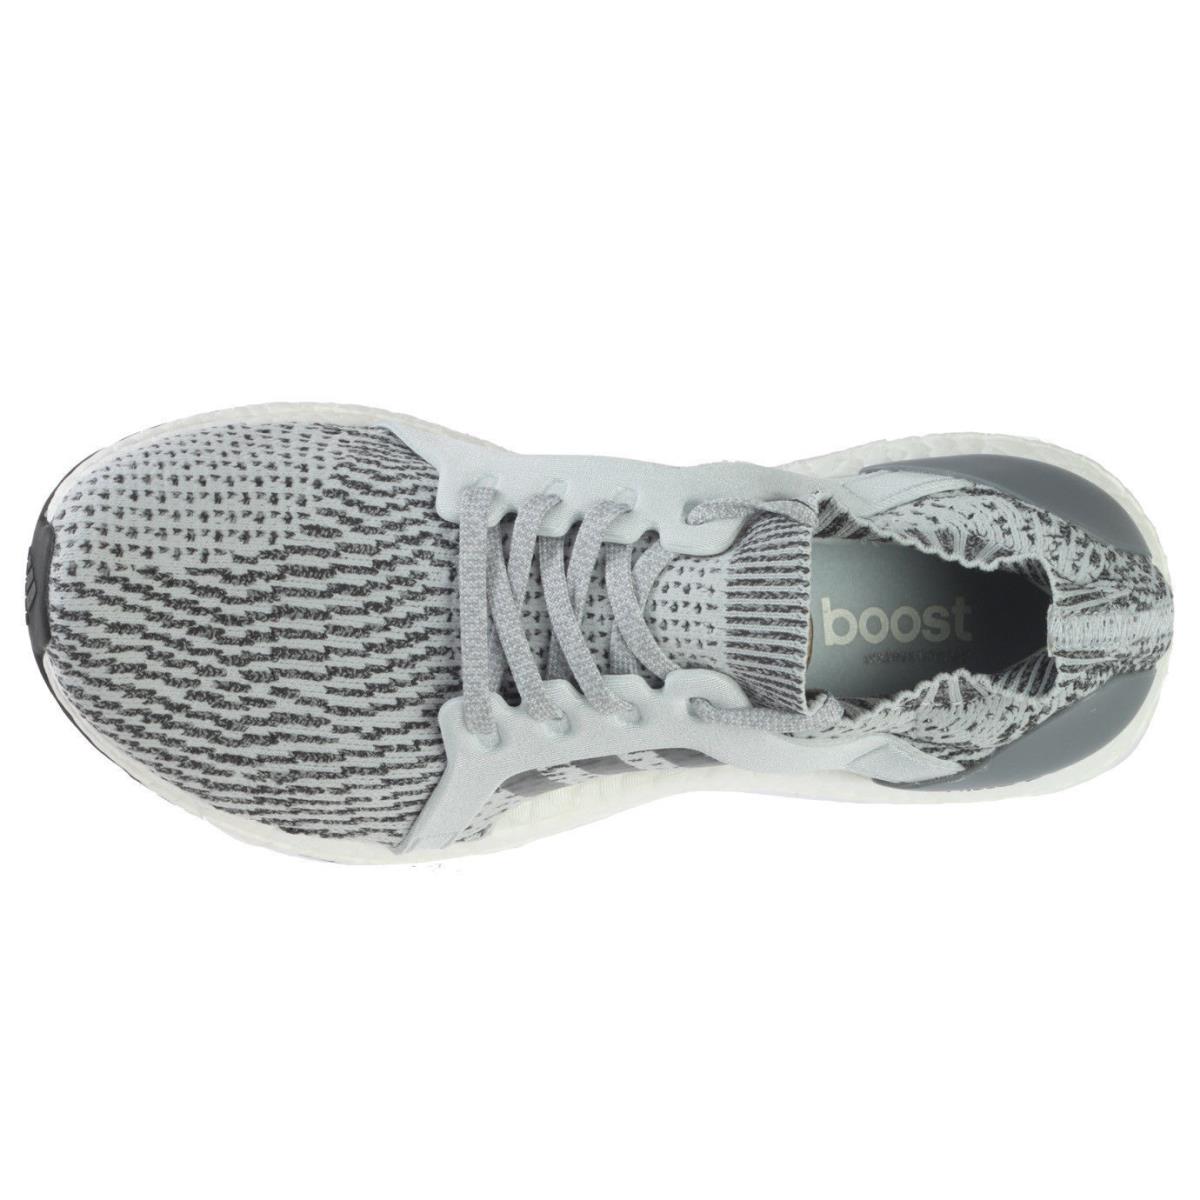 Adidas shoes  - Grey /Silver 0